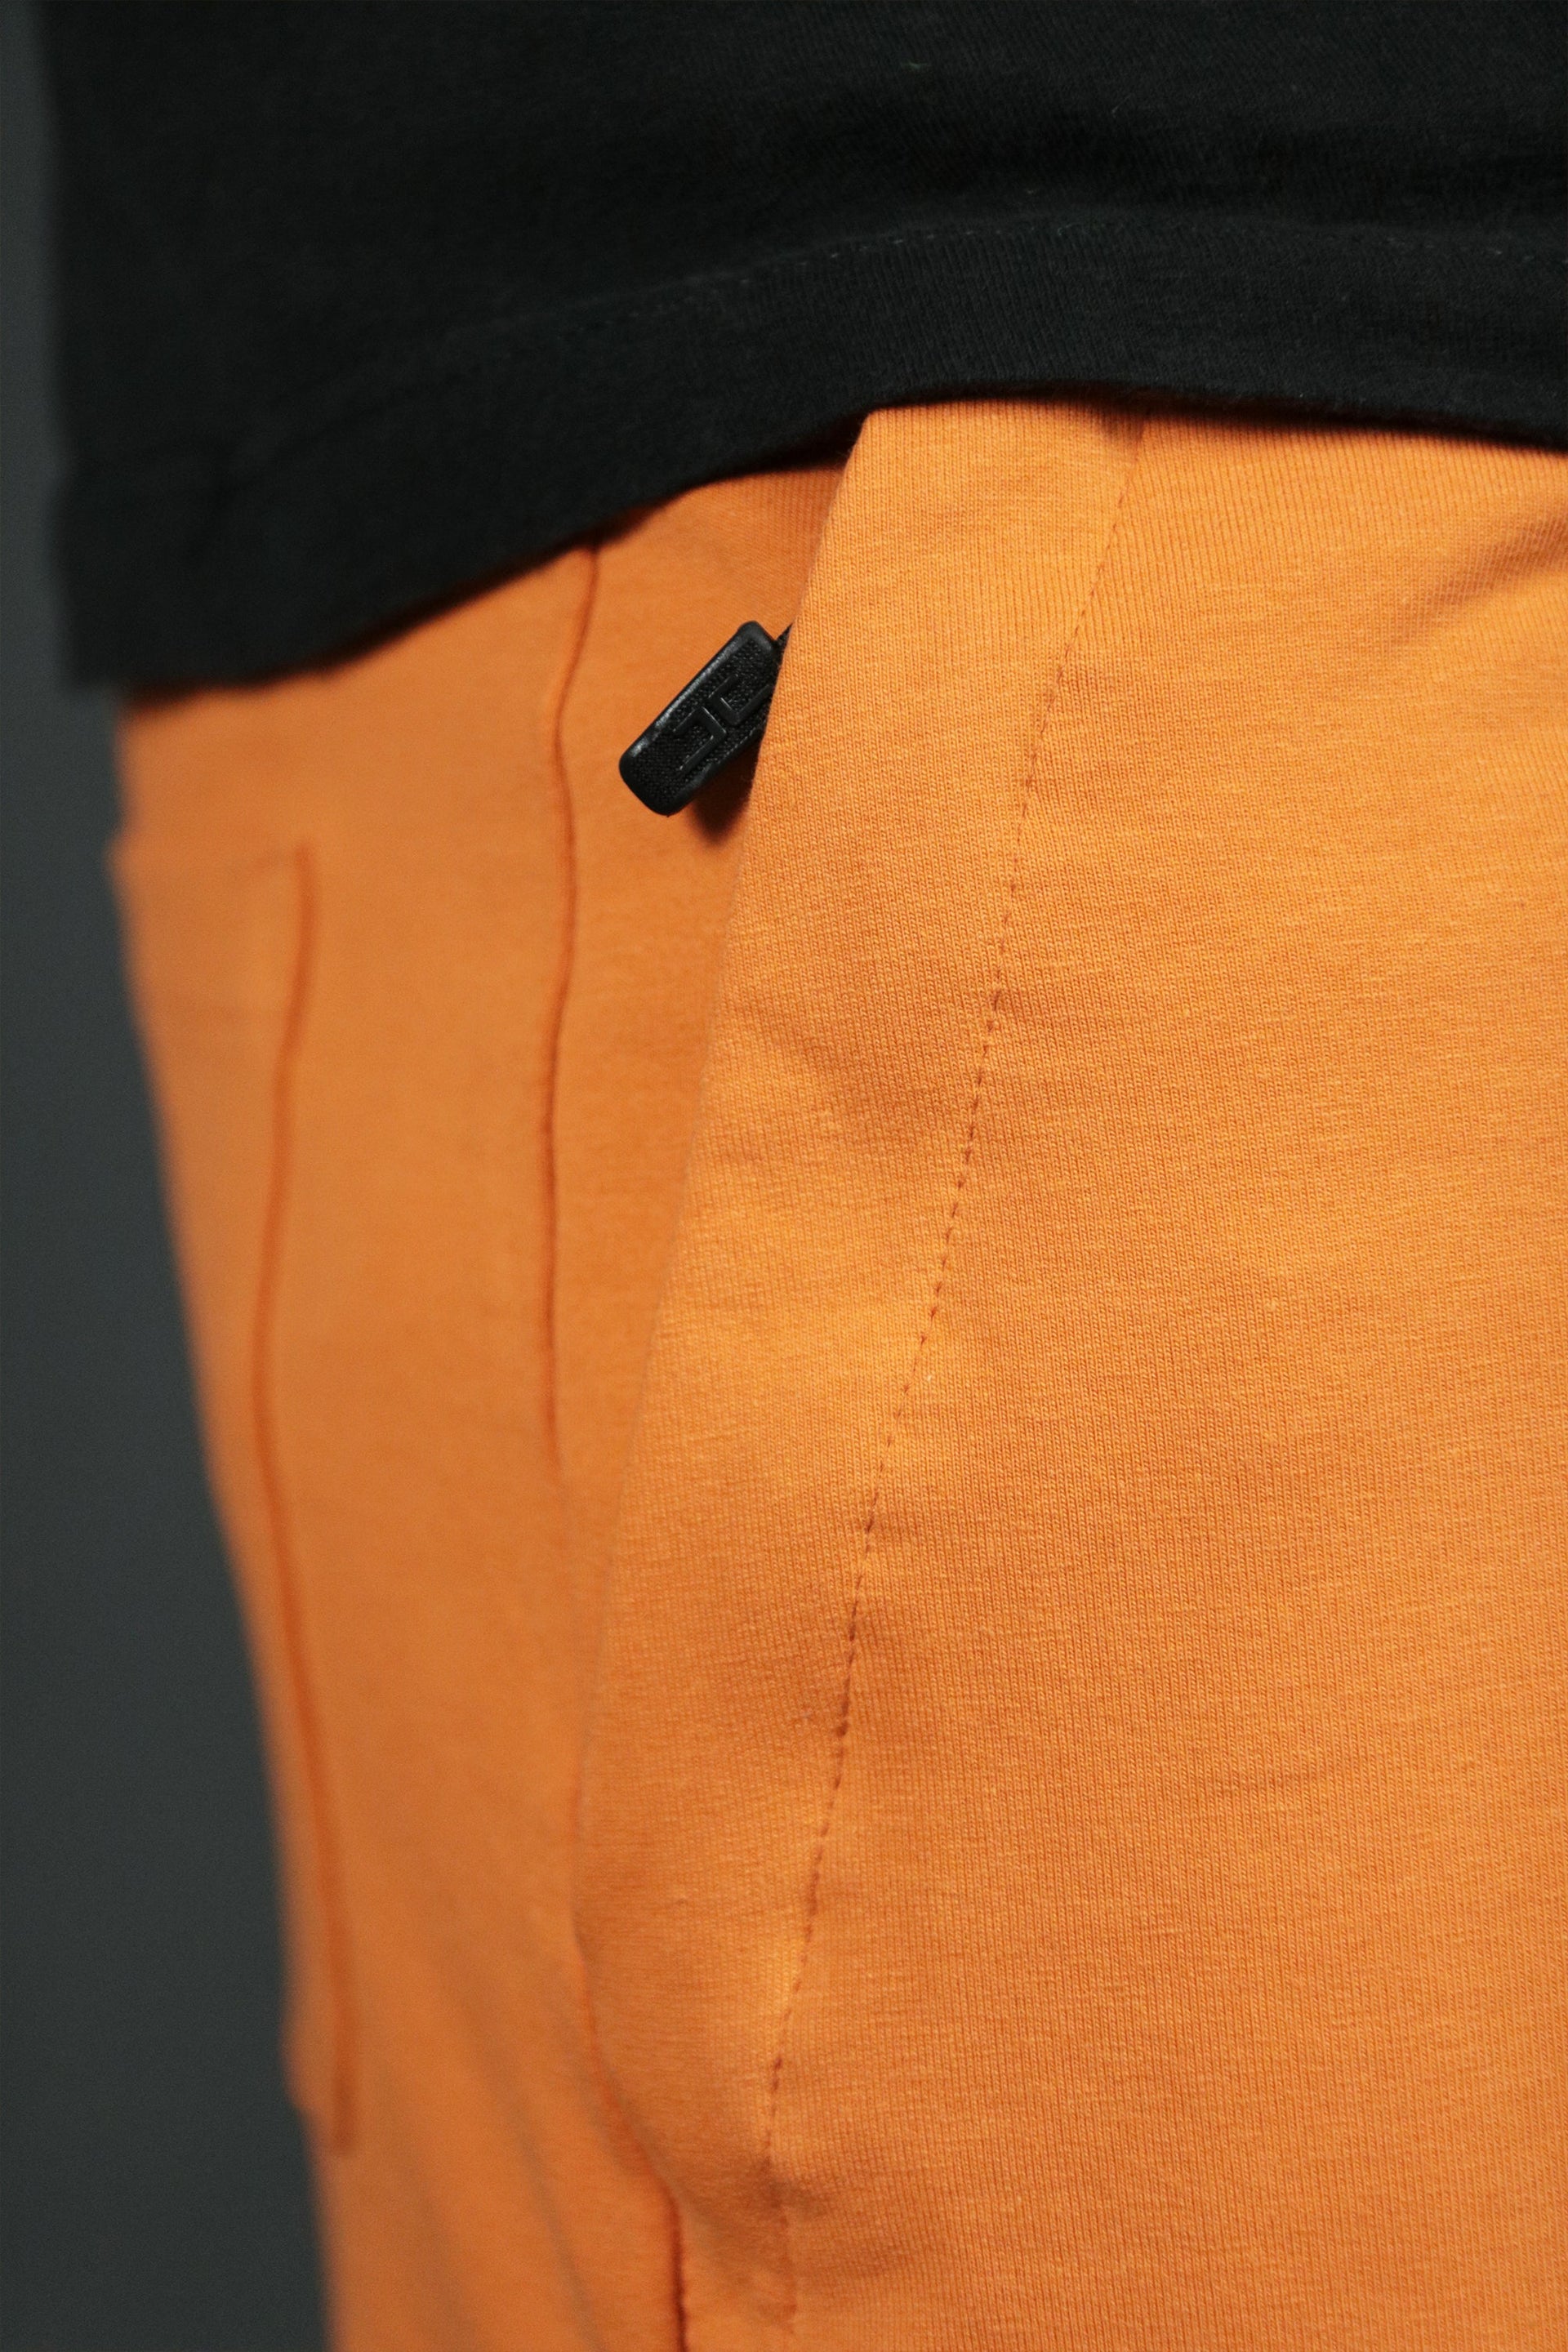 The zipped pocket of the orange mens terry cloth shorts by Jordan Craig.